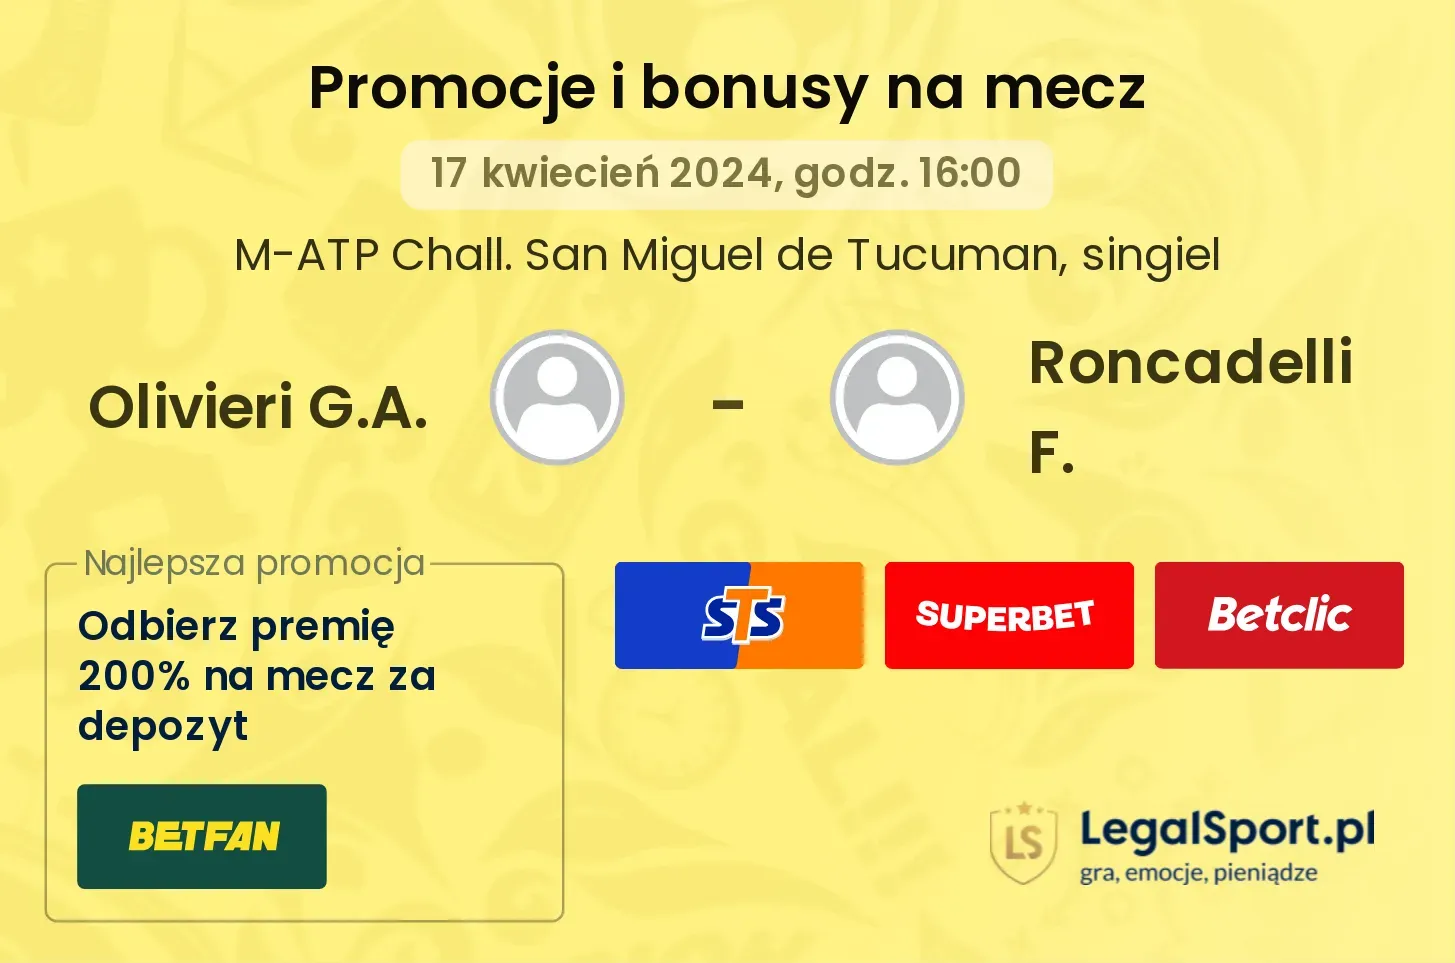 Olivieri G.A. - Roncadelli F. promocje bonusy na mecz